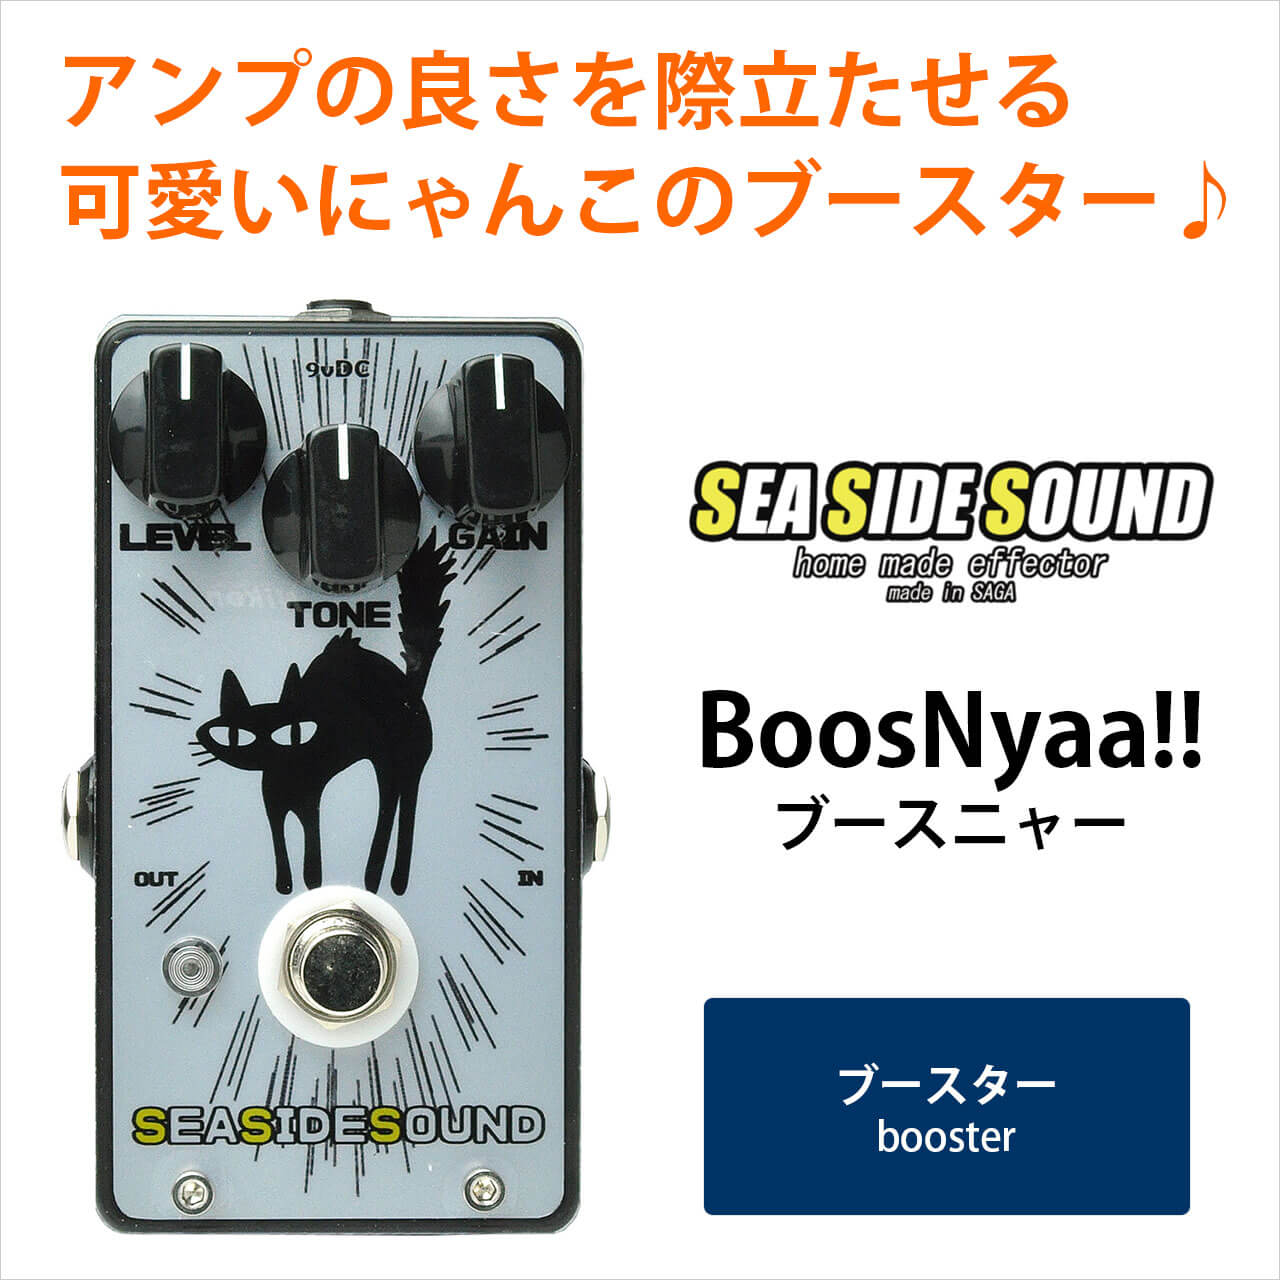 SEA SIDE SOUND シーサイドサウンド / BoosNyaa!!【ブースター】